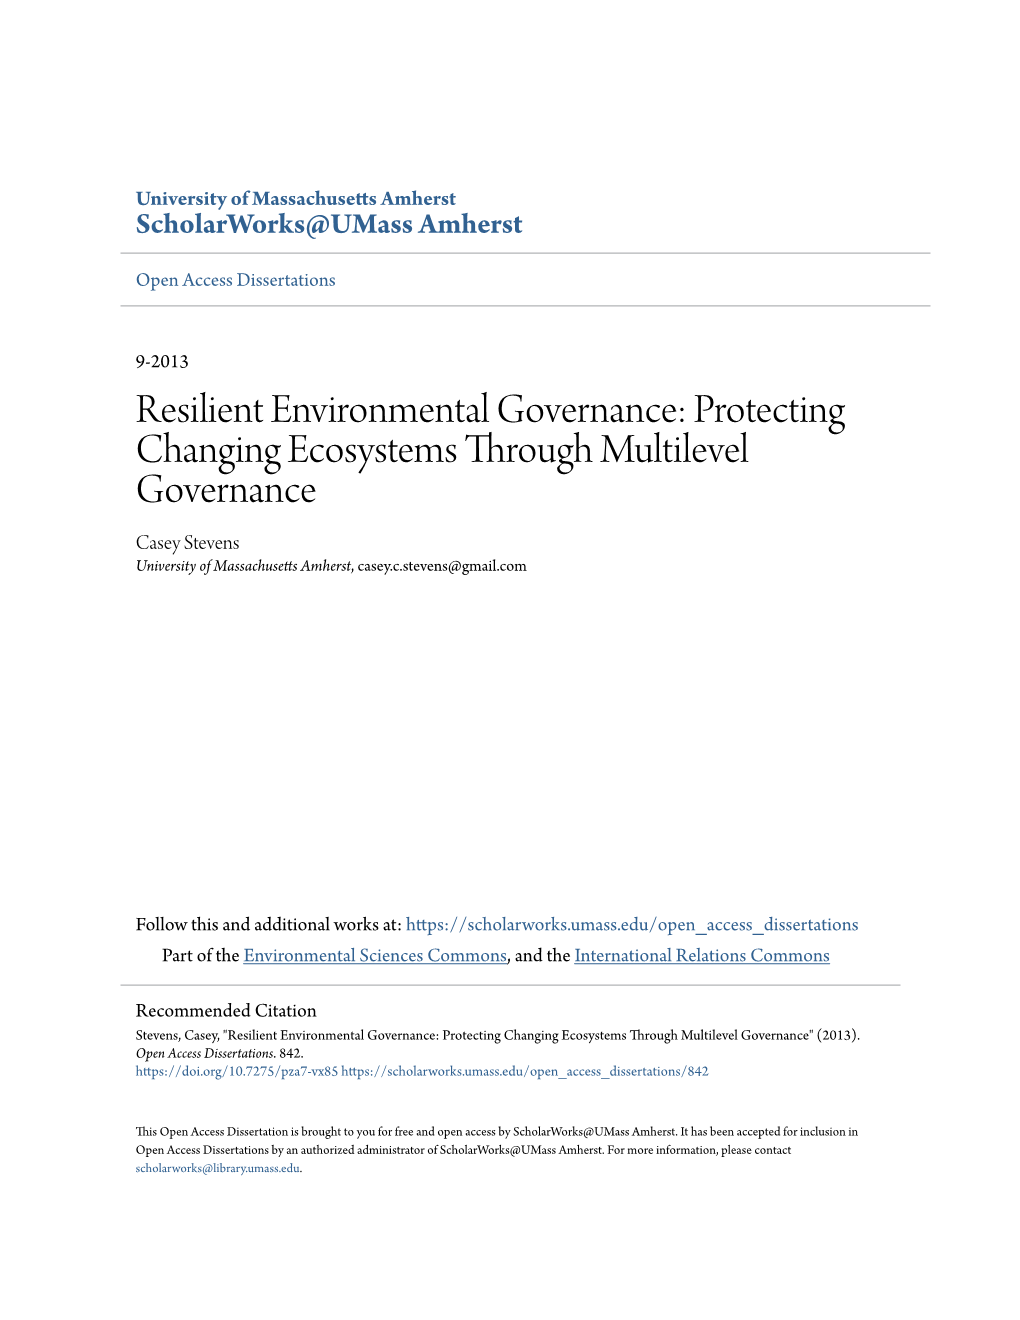 Resilient Environmental Governance